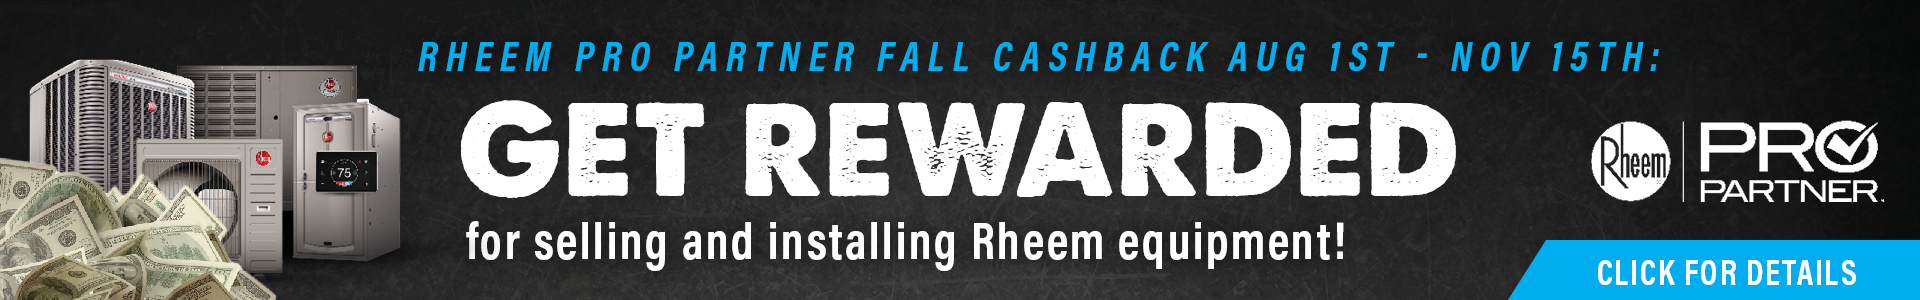 Rheem Pro Partner Cashback - get rewarded for selling Rheem equipment